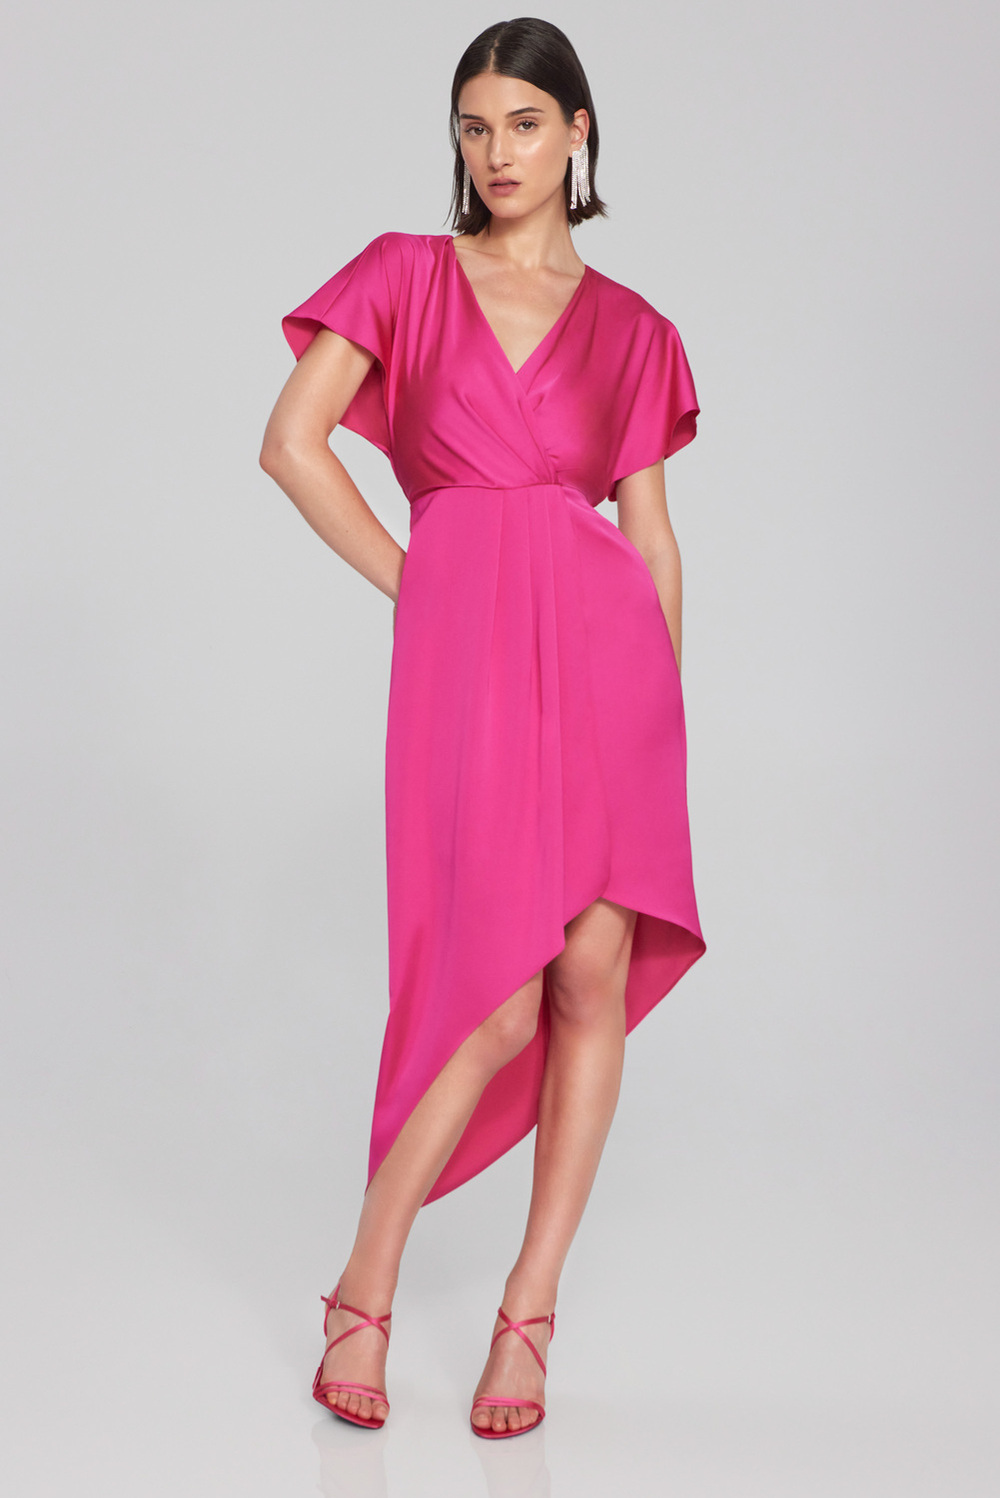 Robe portefeuille, jupe asymétrique modèle 241777. Shocking Pink